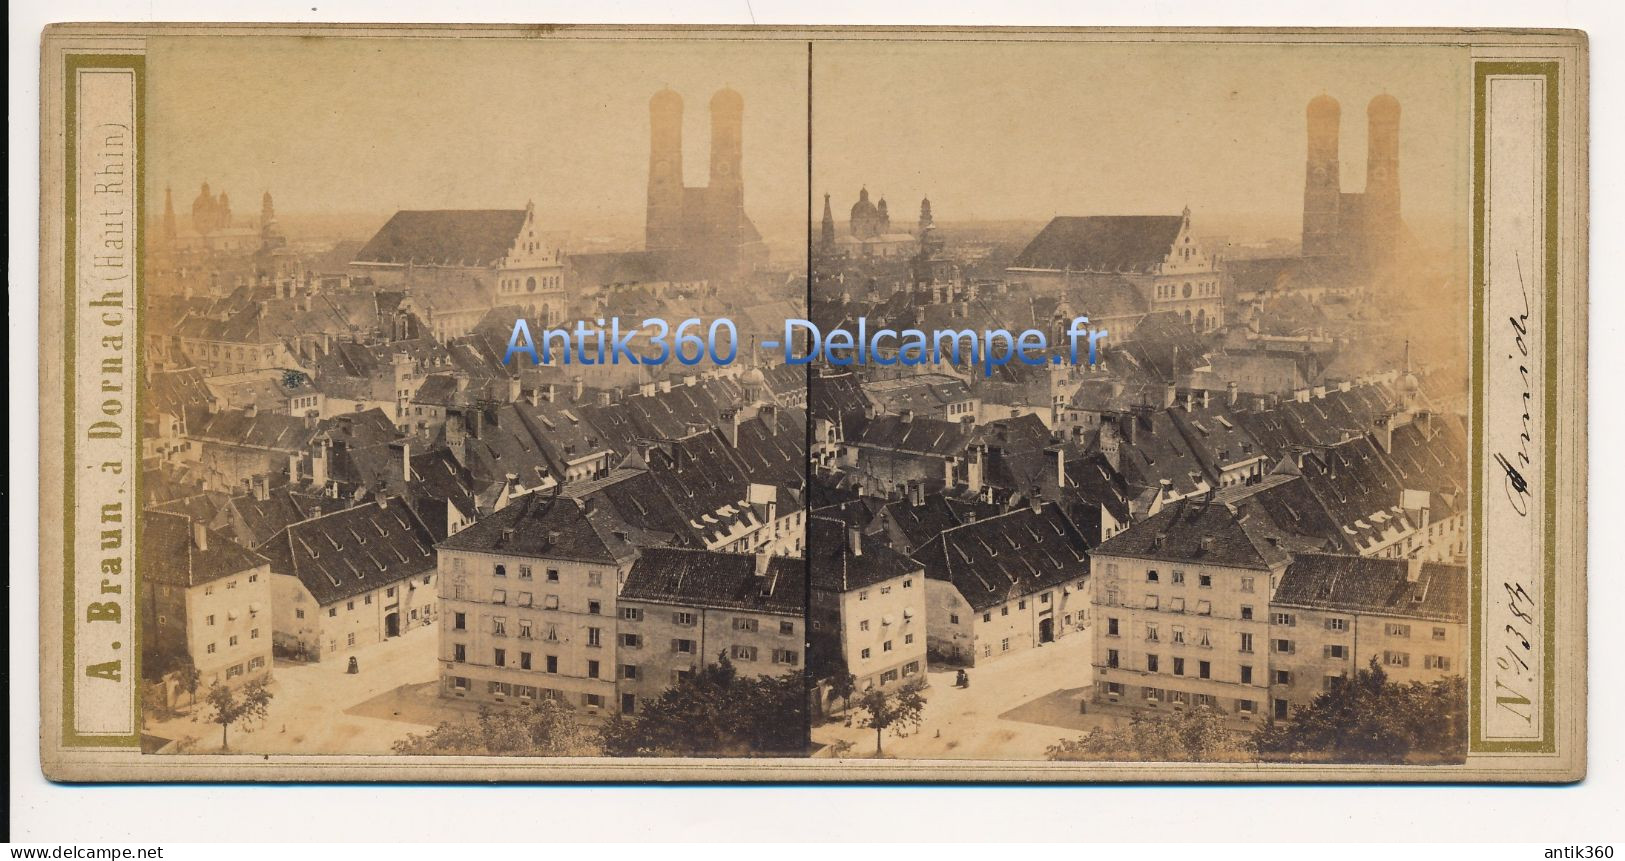 Photographie Ancienne Vue Stéréoscopique Circa 1860 Allemagne Vue De Munich Photographe Adolphe BRAUN - Stereoscoop